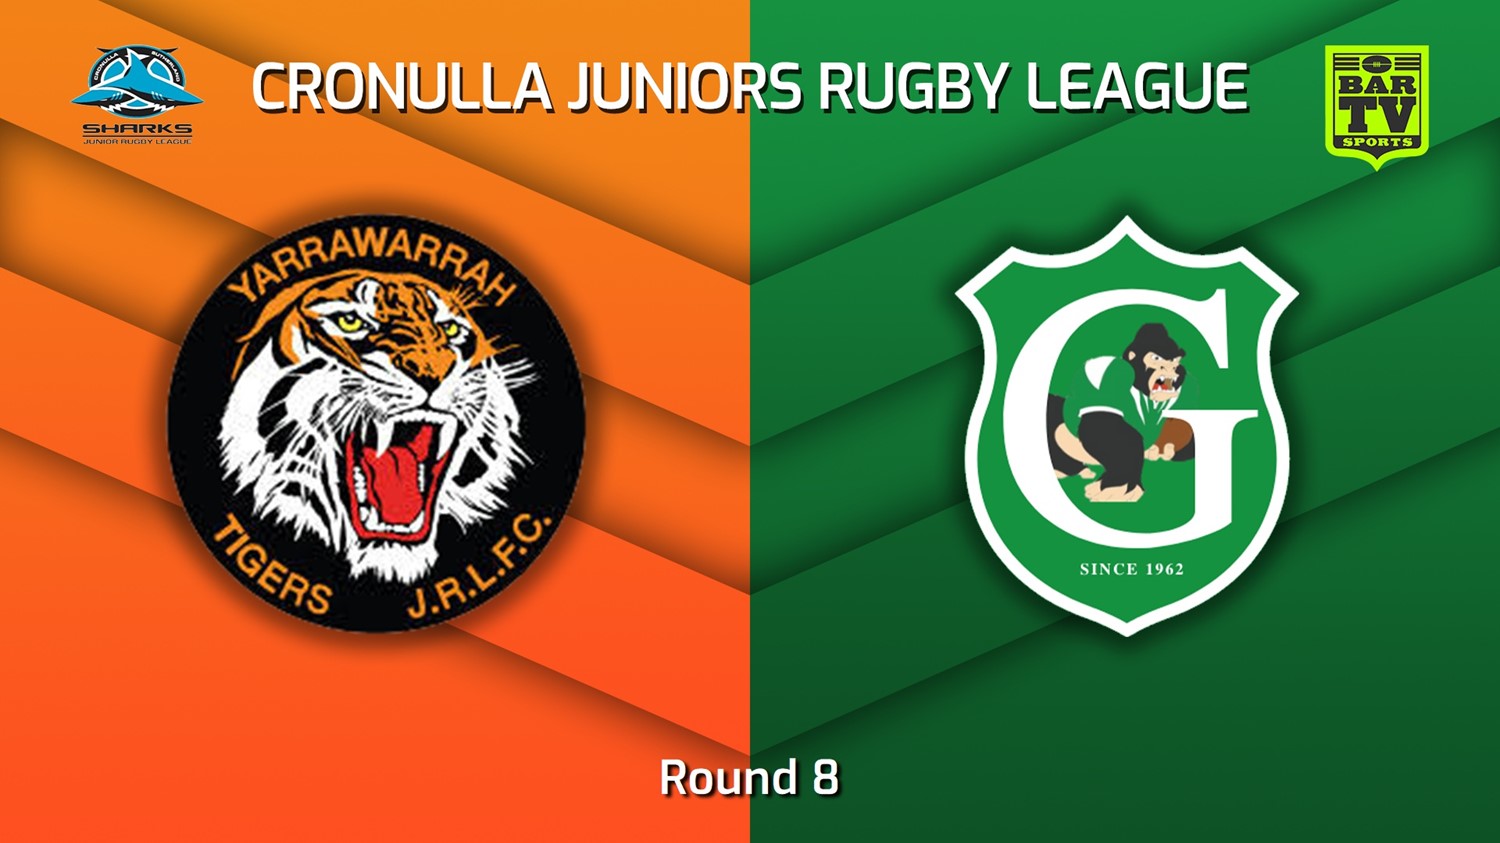 220625-Cronulla Juniors - U7 Silver Round 8 - Yarrawarrah Tigers v Gymea Gorillas Slate Image